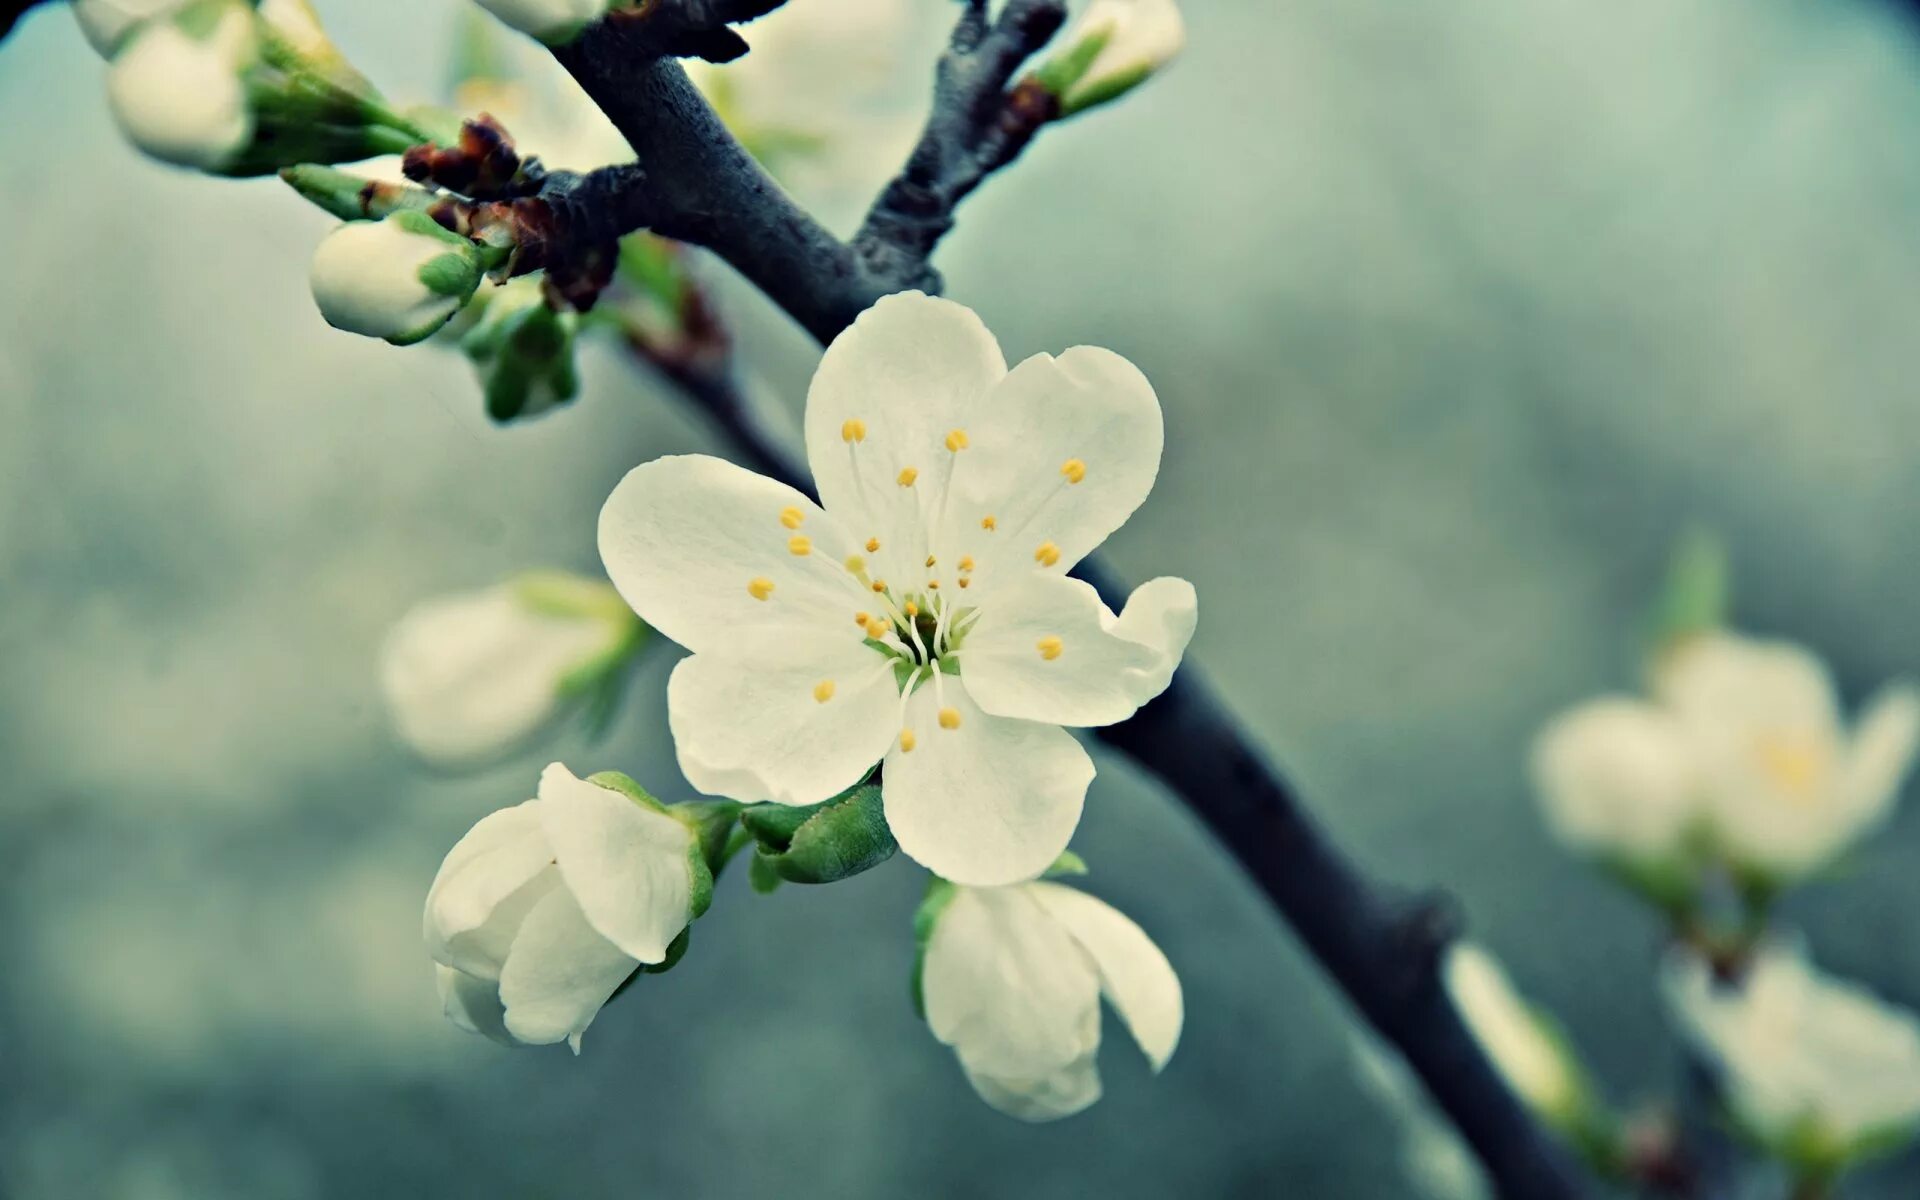 Картинки весны на телефон на заставку. Весенние цветы. Цветущие ветки. Цветы вишни. Цветение вишни.